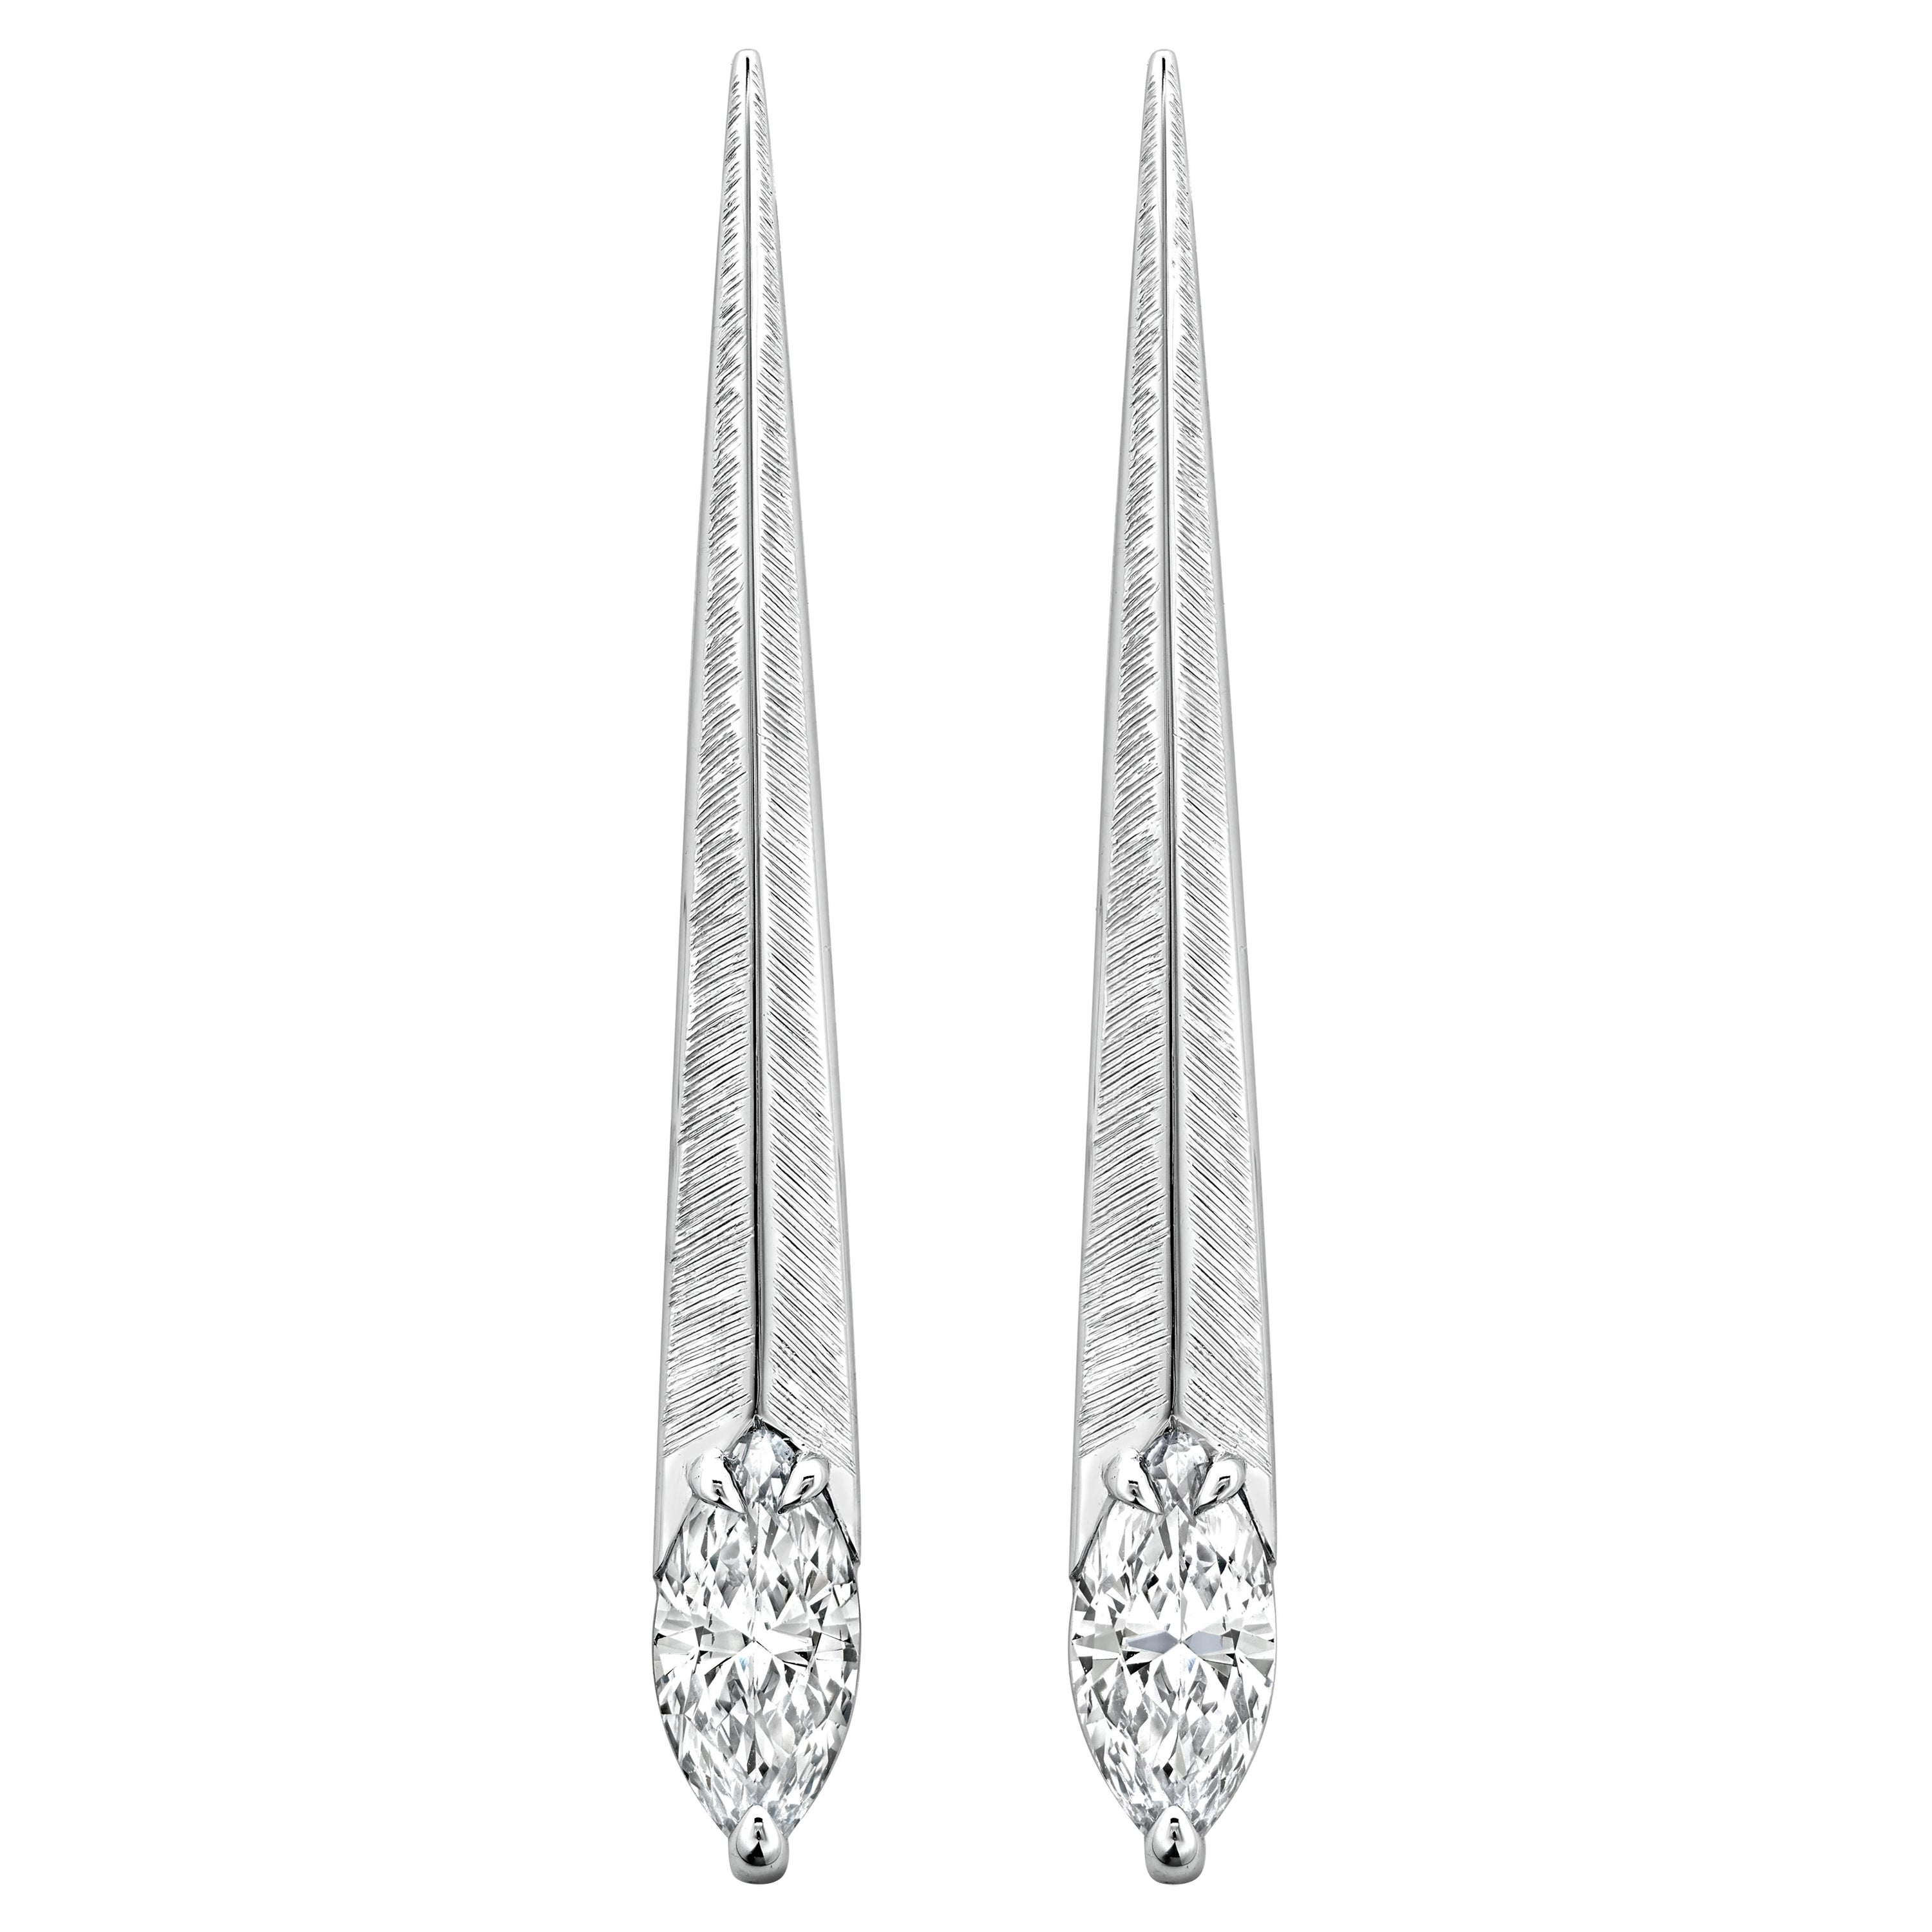 Marquise Diamond Spear Tip Earrings, 18 Karat White Gold, by Liv Luttrell